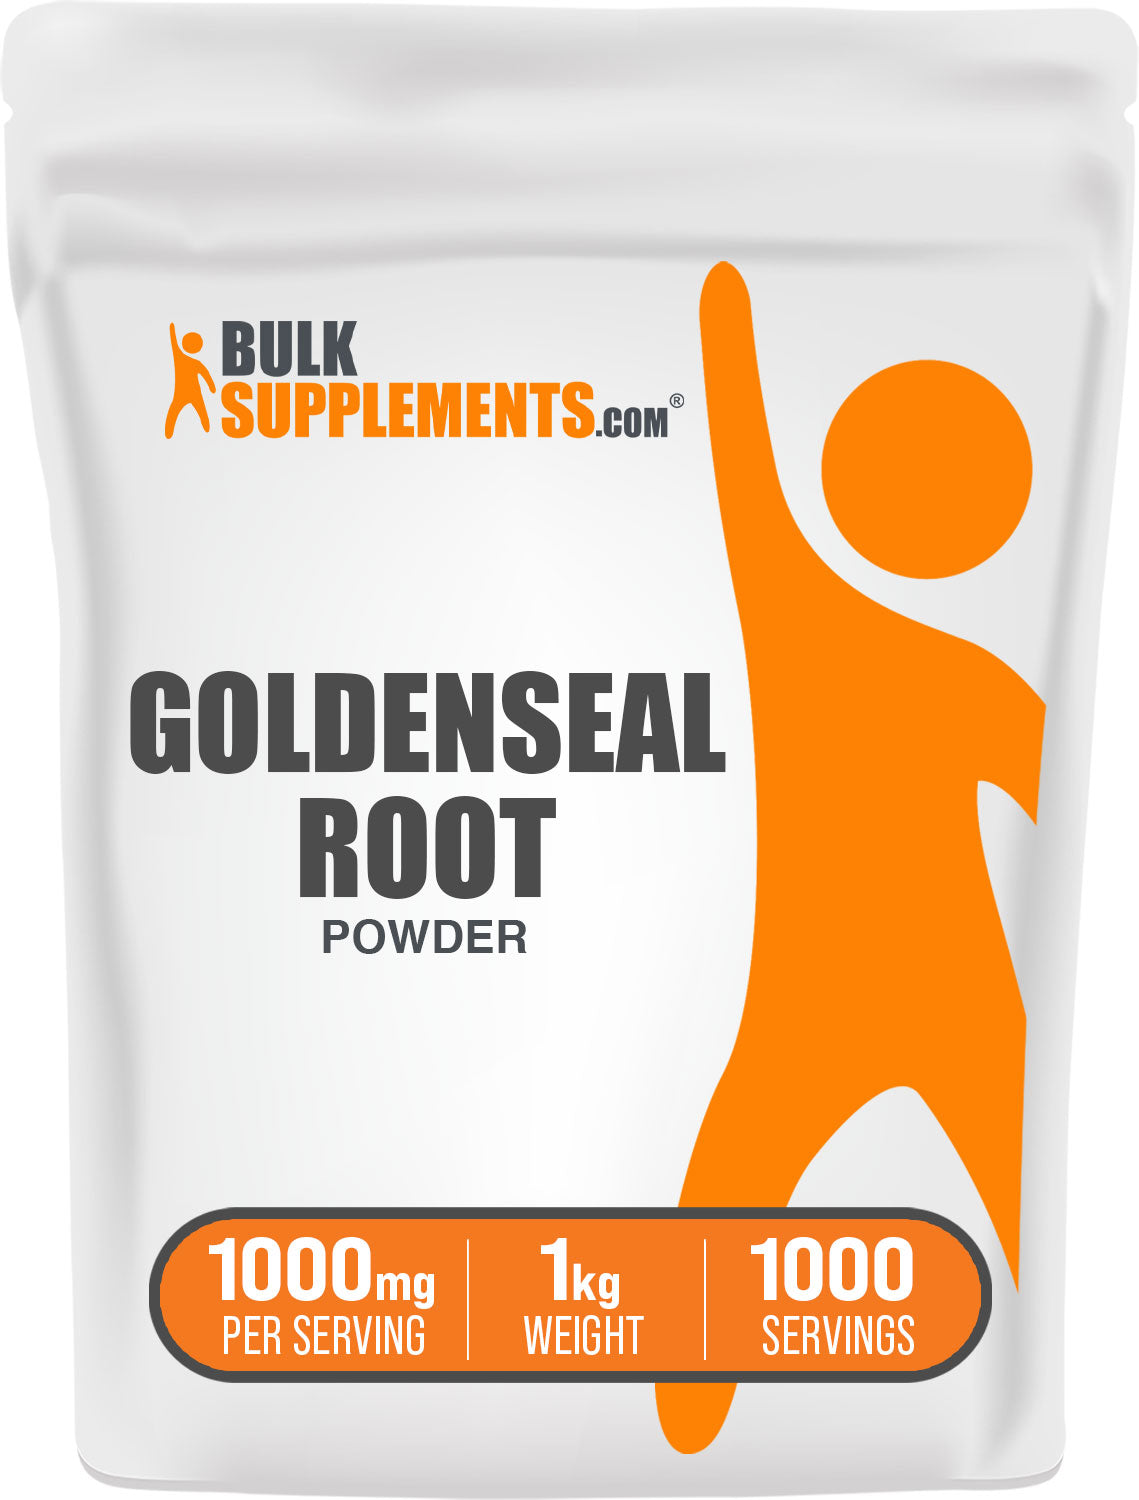 Goldenseal root powder bag image 1kg